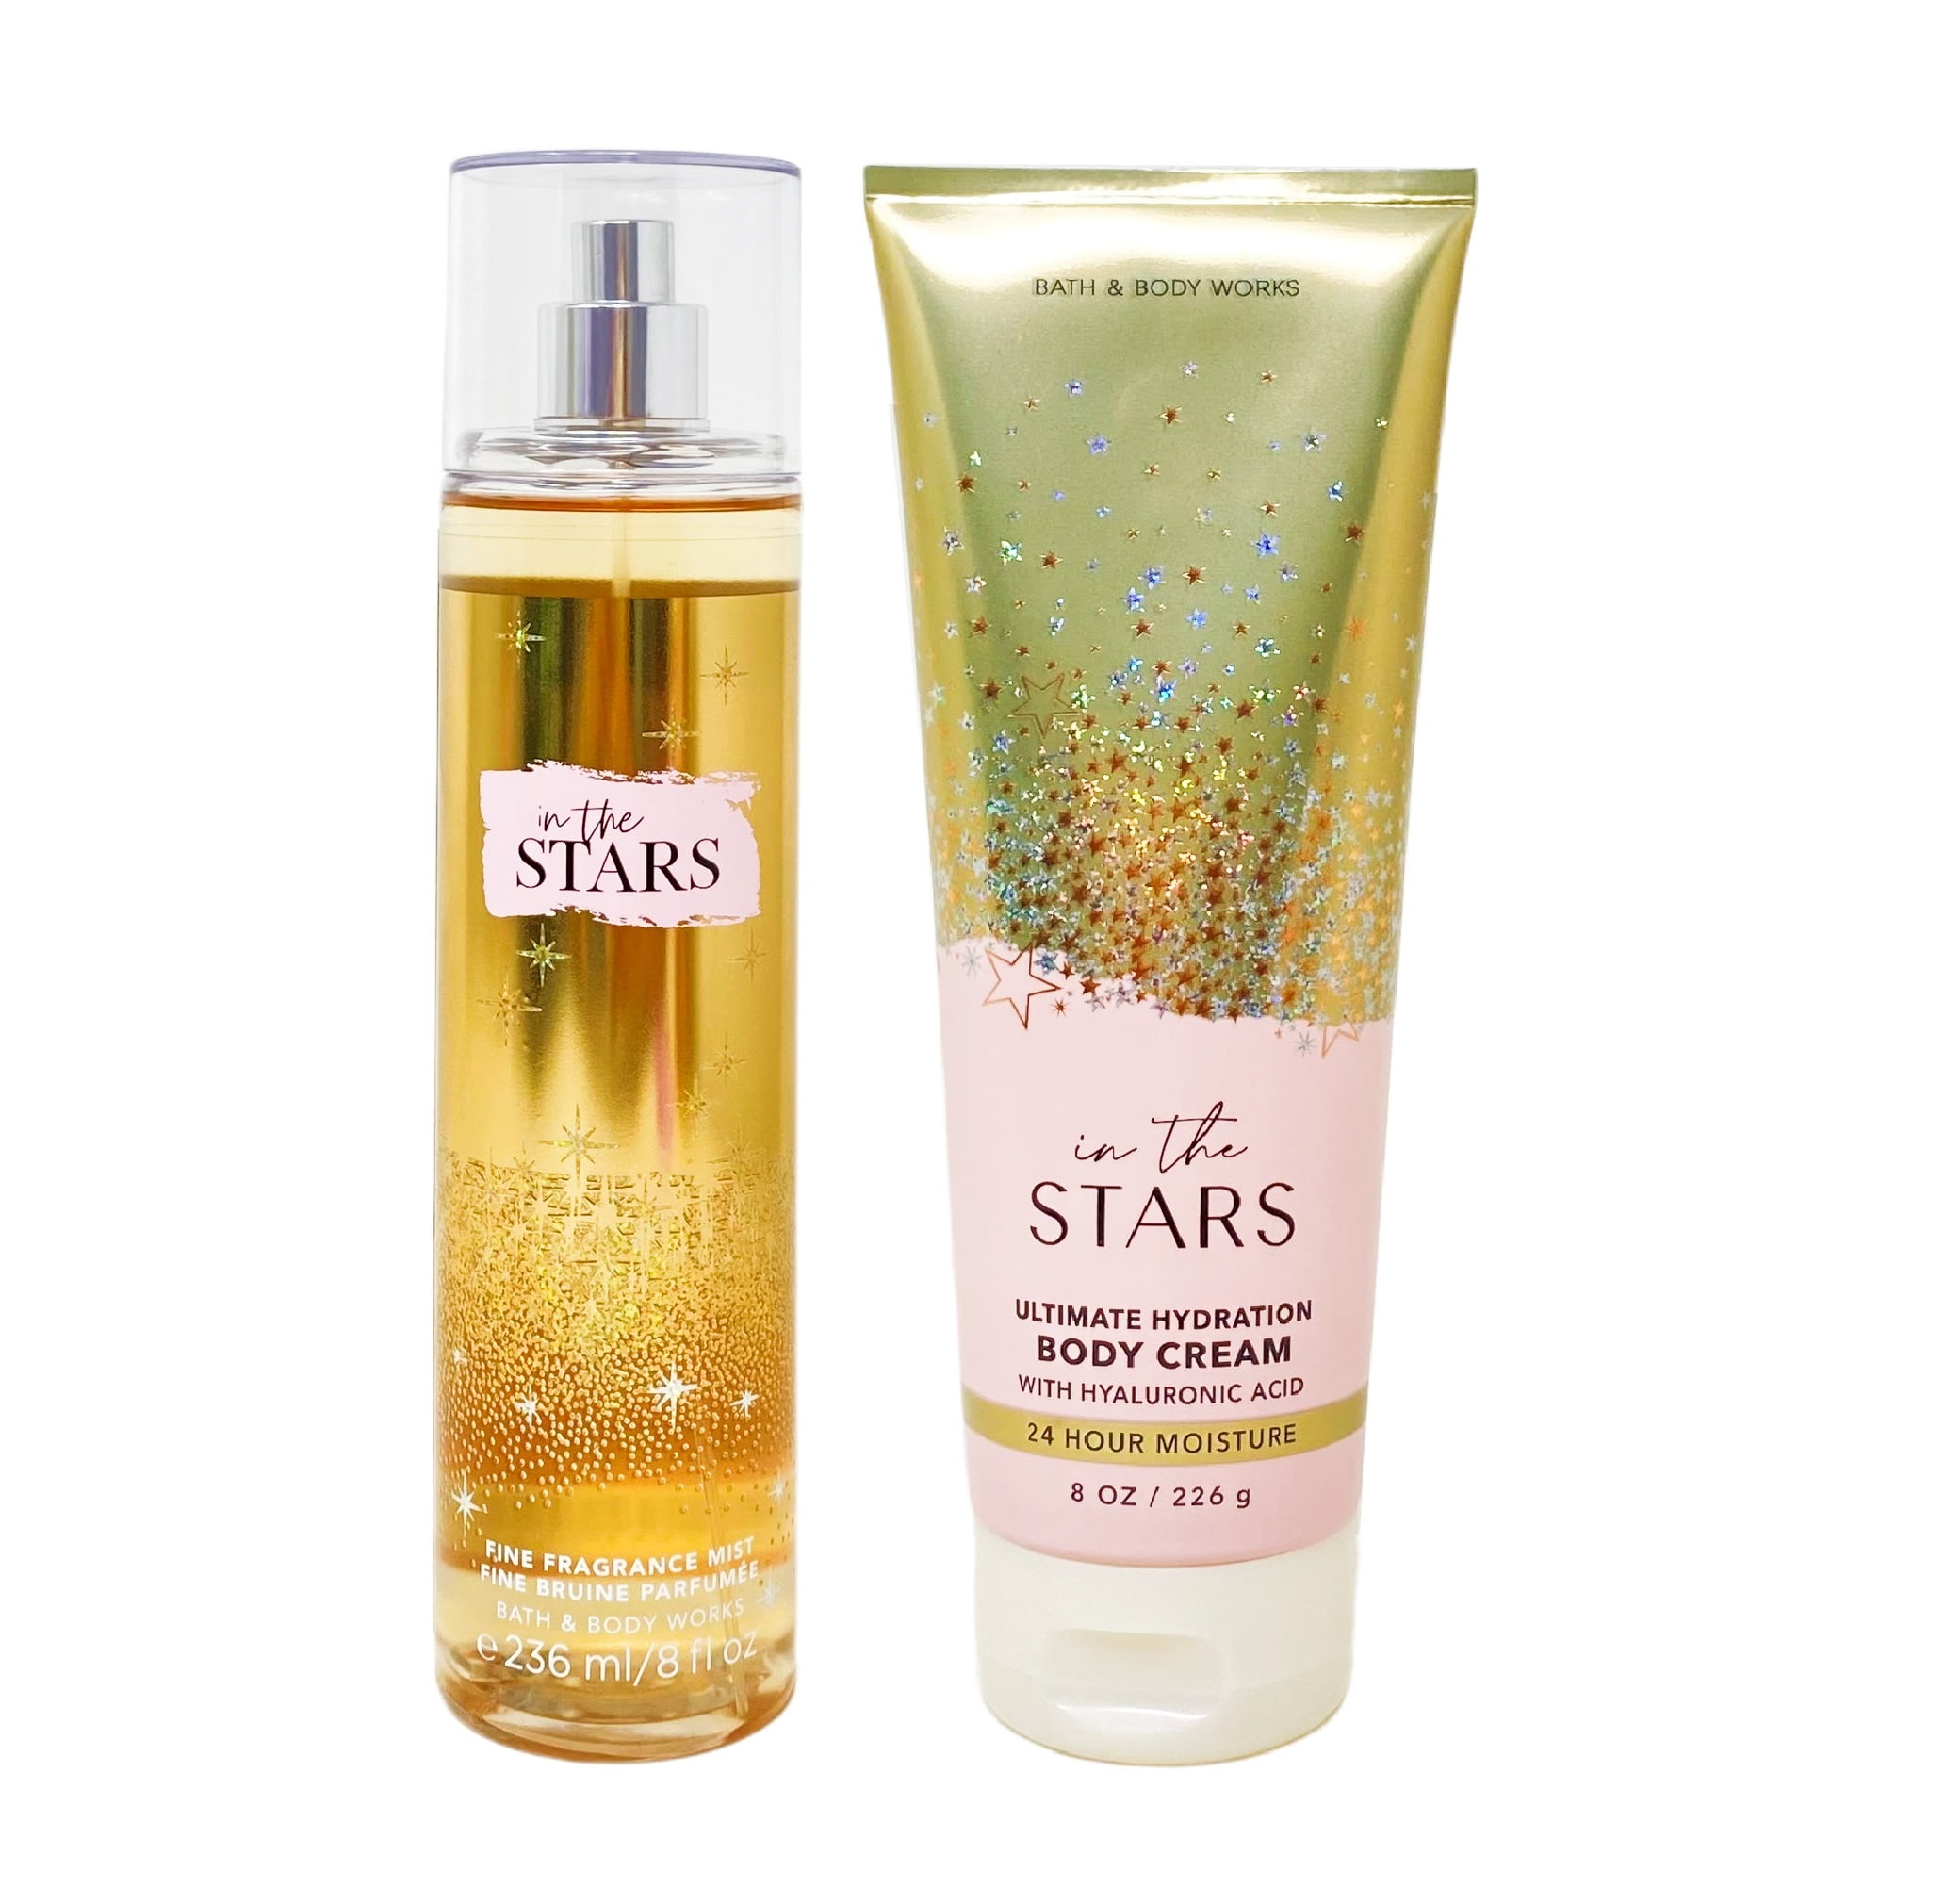 Bath & Body Works in The Stars Fine Fragrance Body Mist Full Size 8 oz